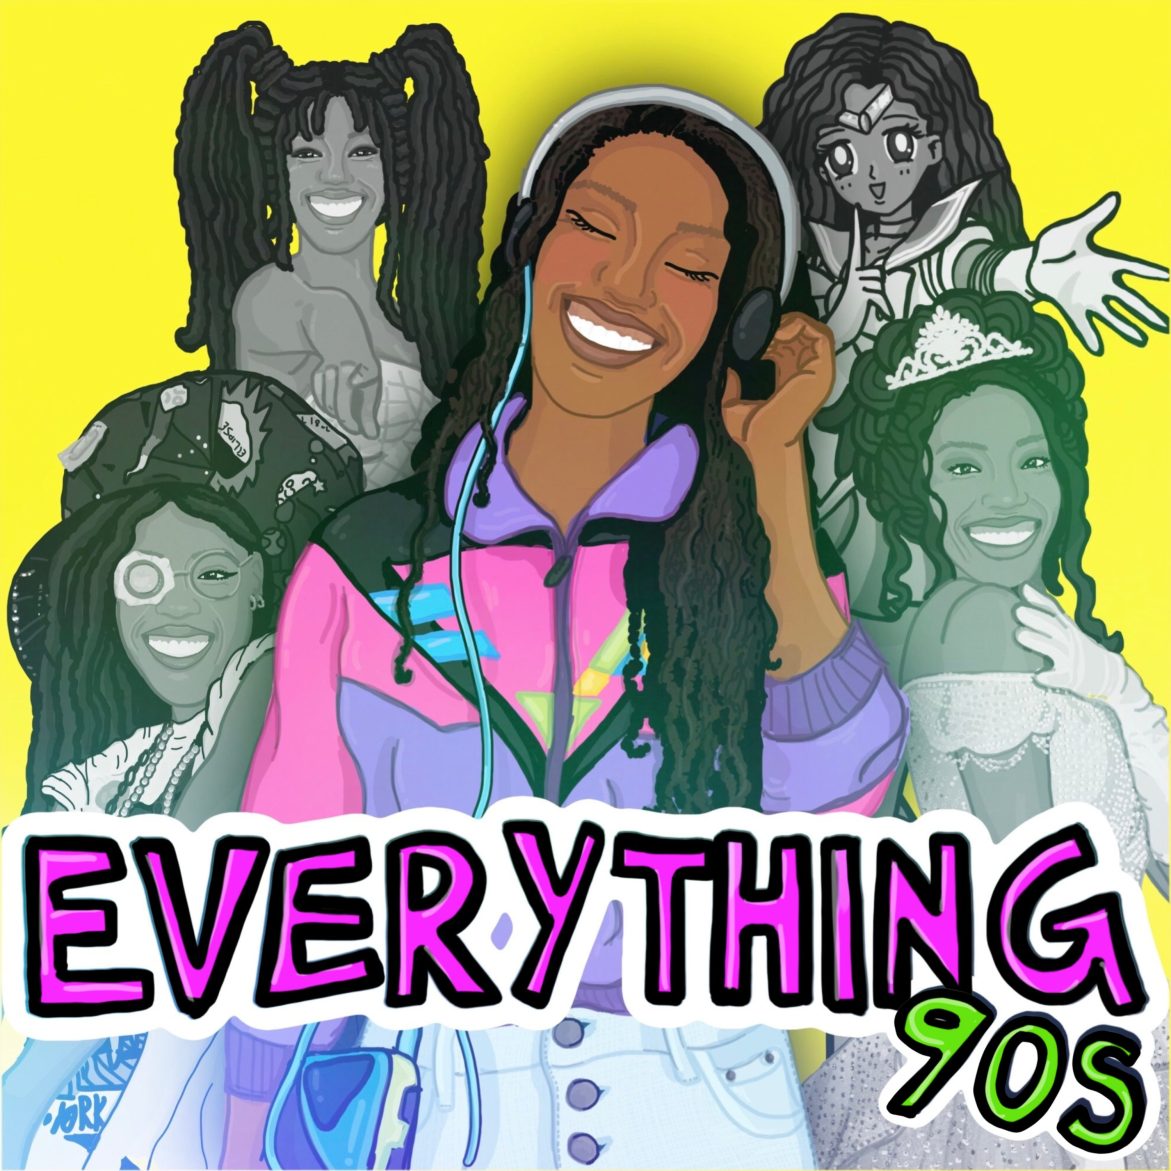 Black Podcasting - Naughty 90s Playlist